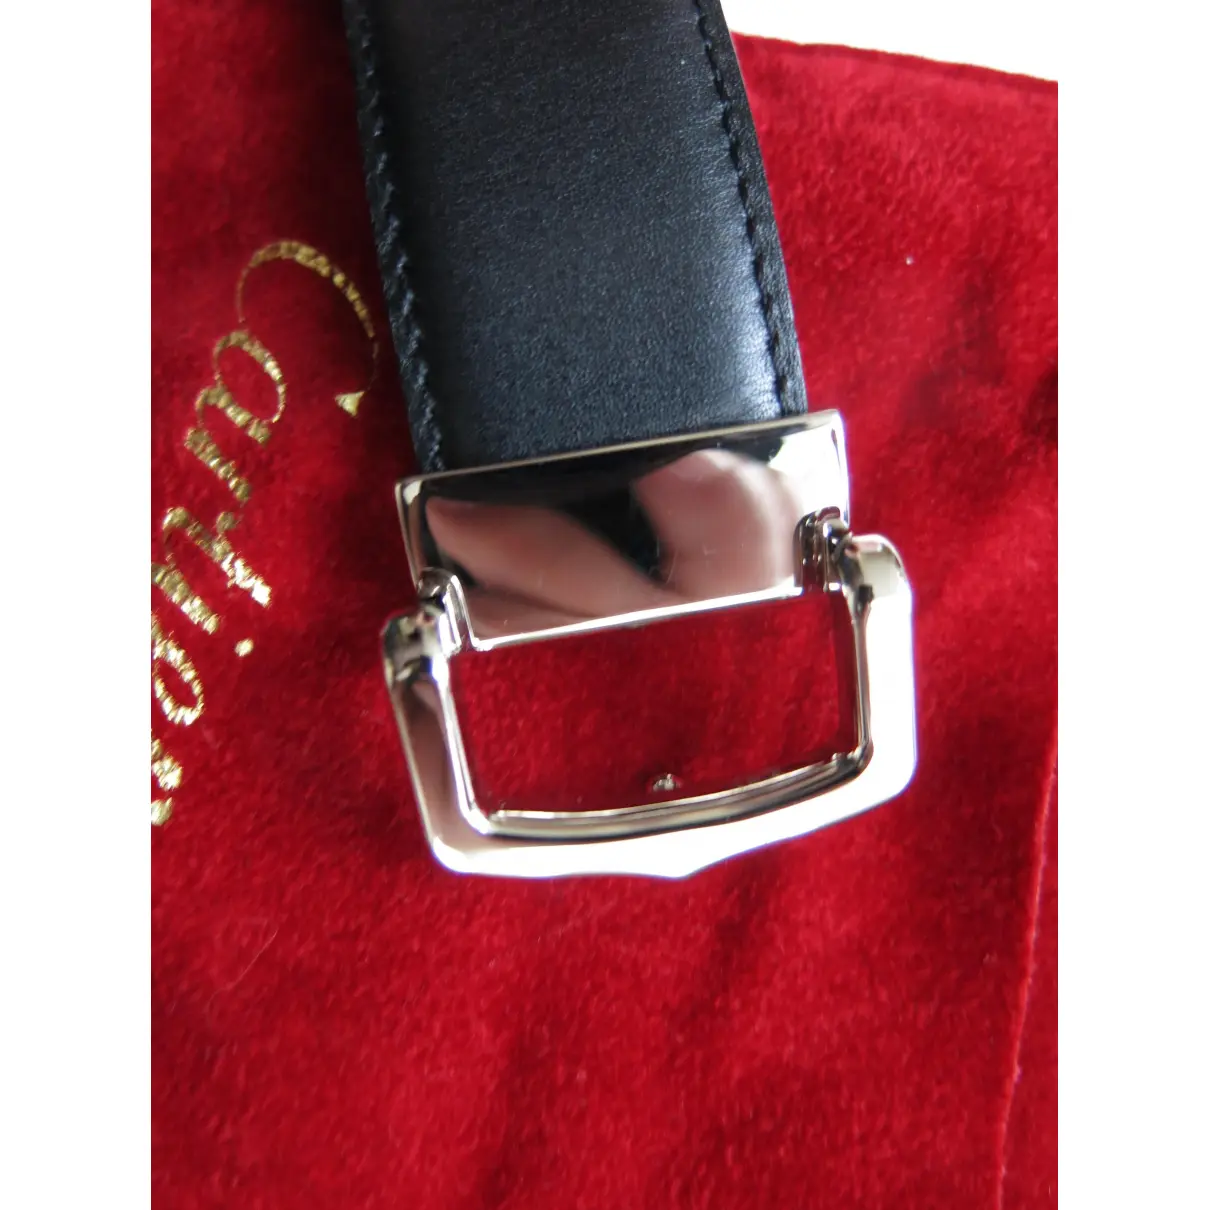 Buy Cartier Leather belt online